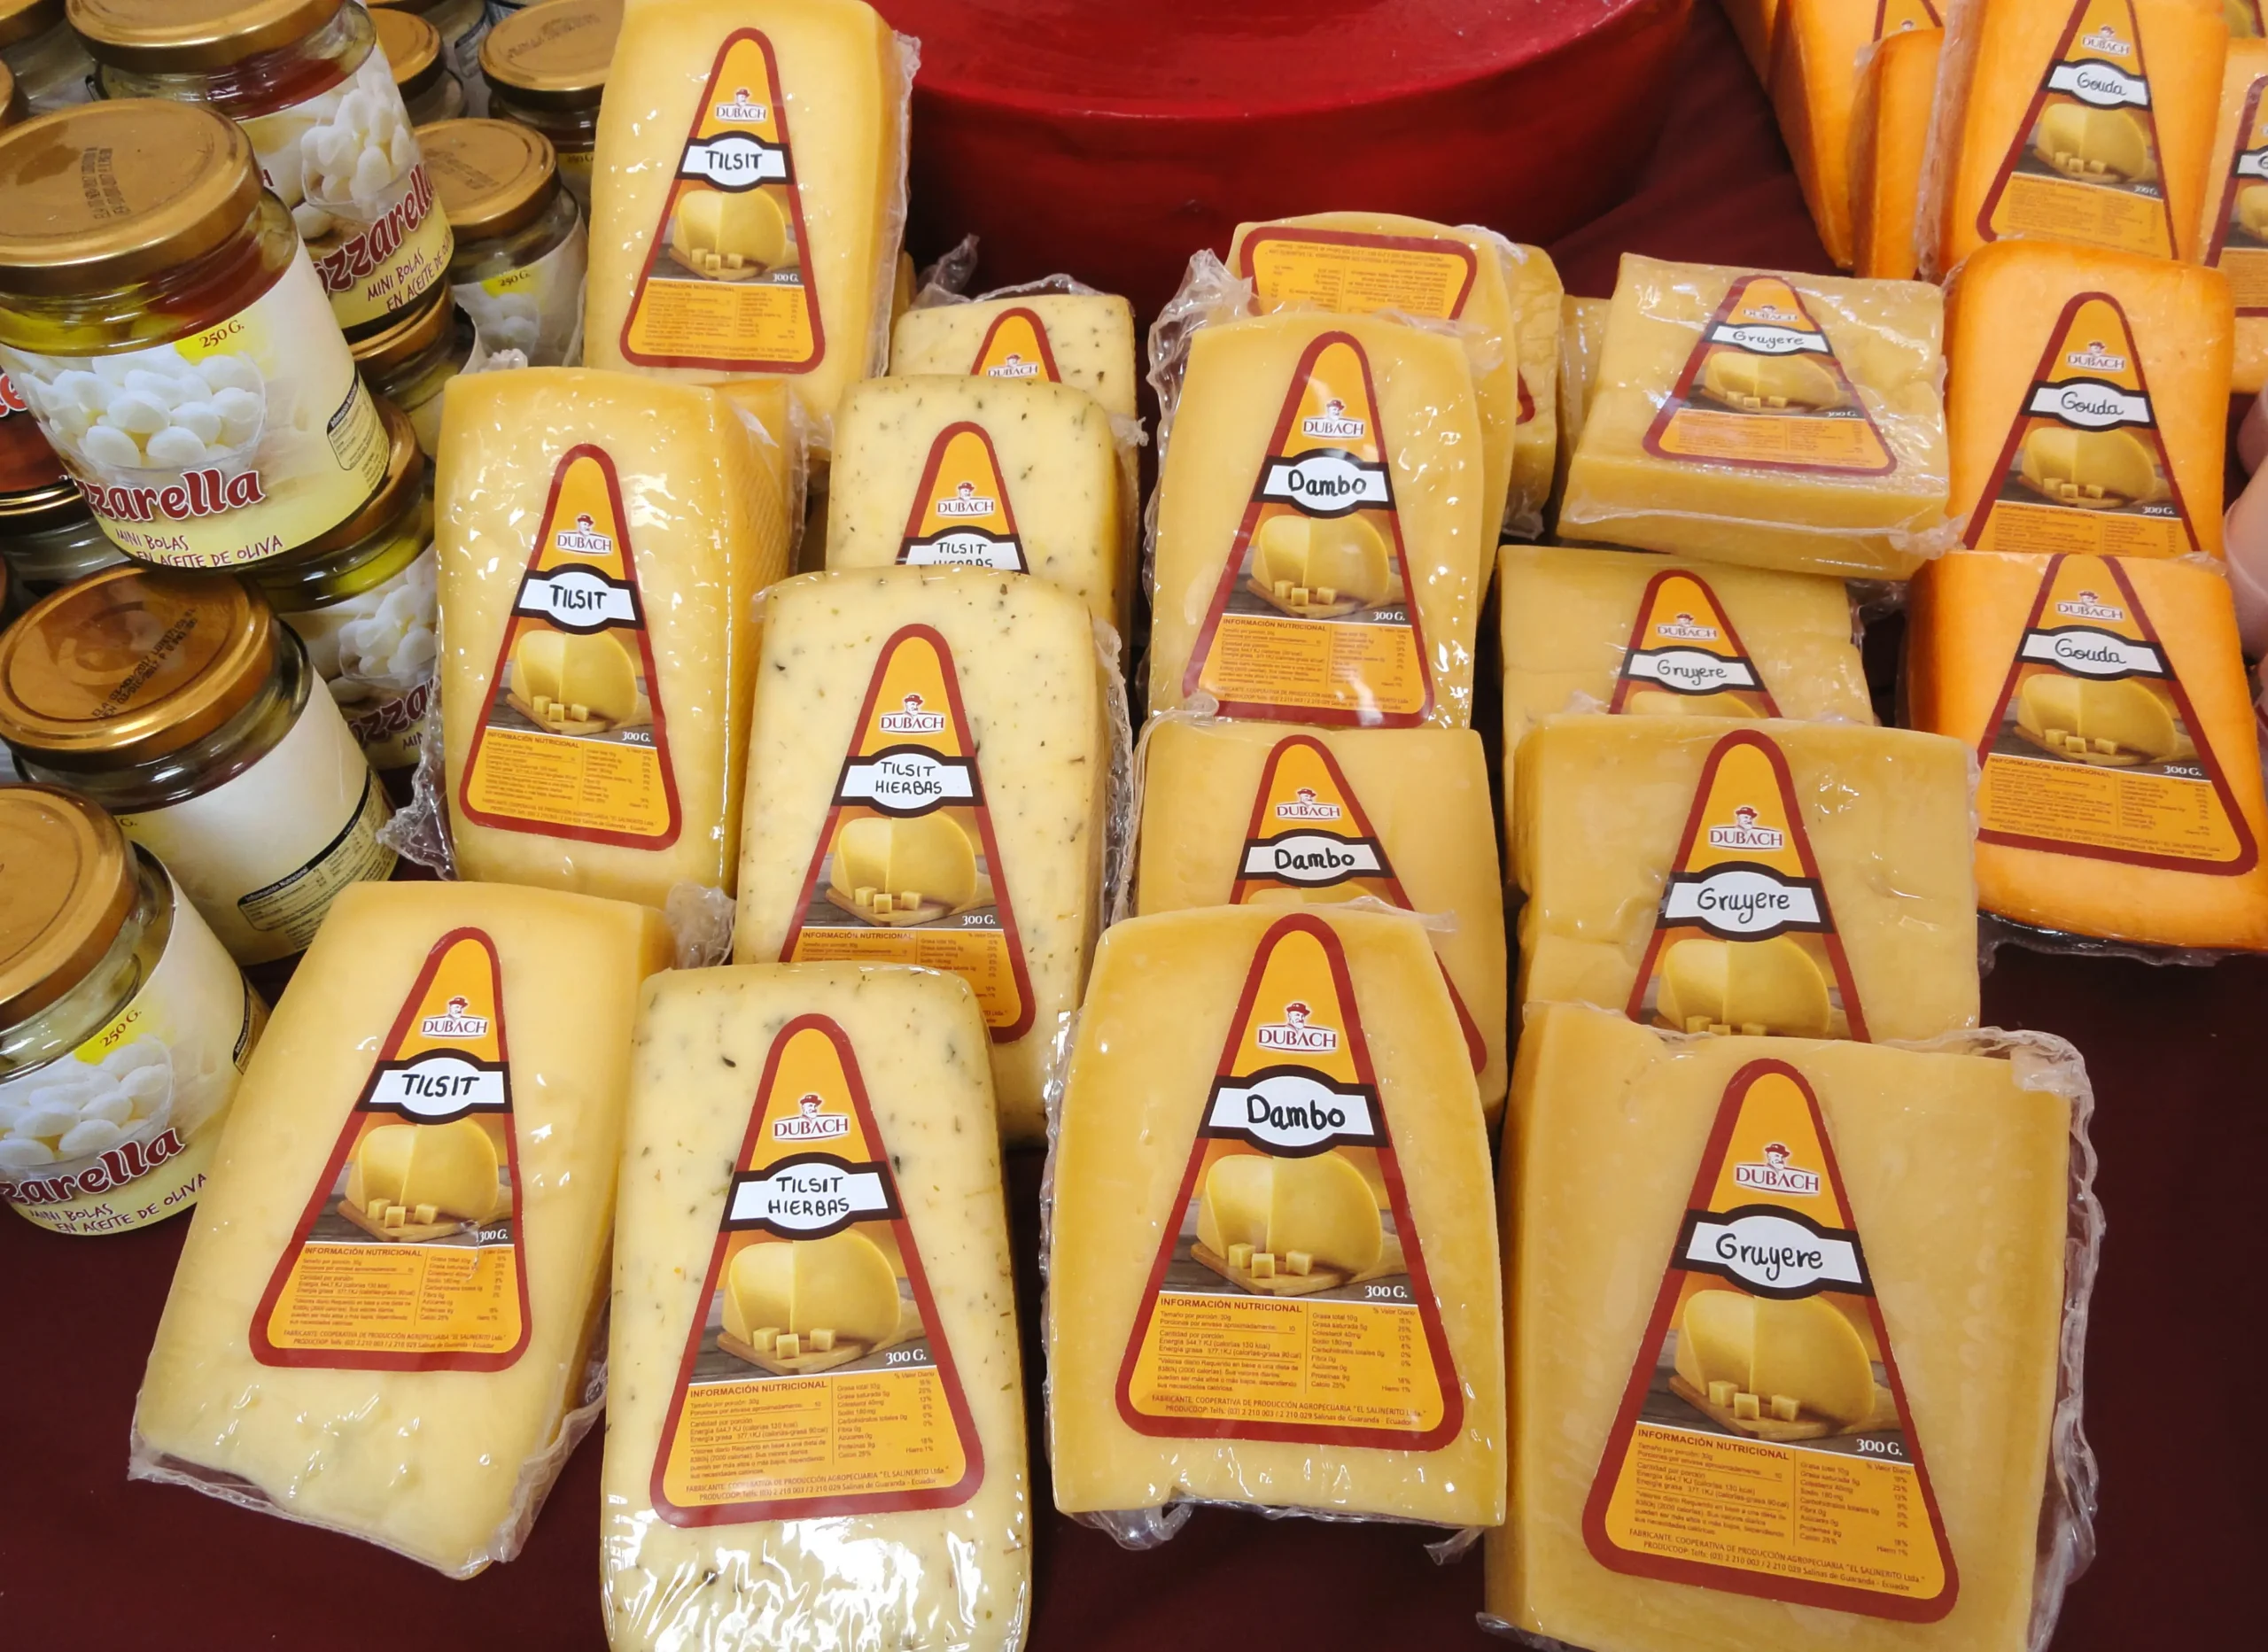 quesos de guaranda - Qué productos se producen en Salinas de Guaranda